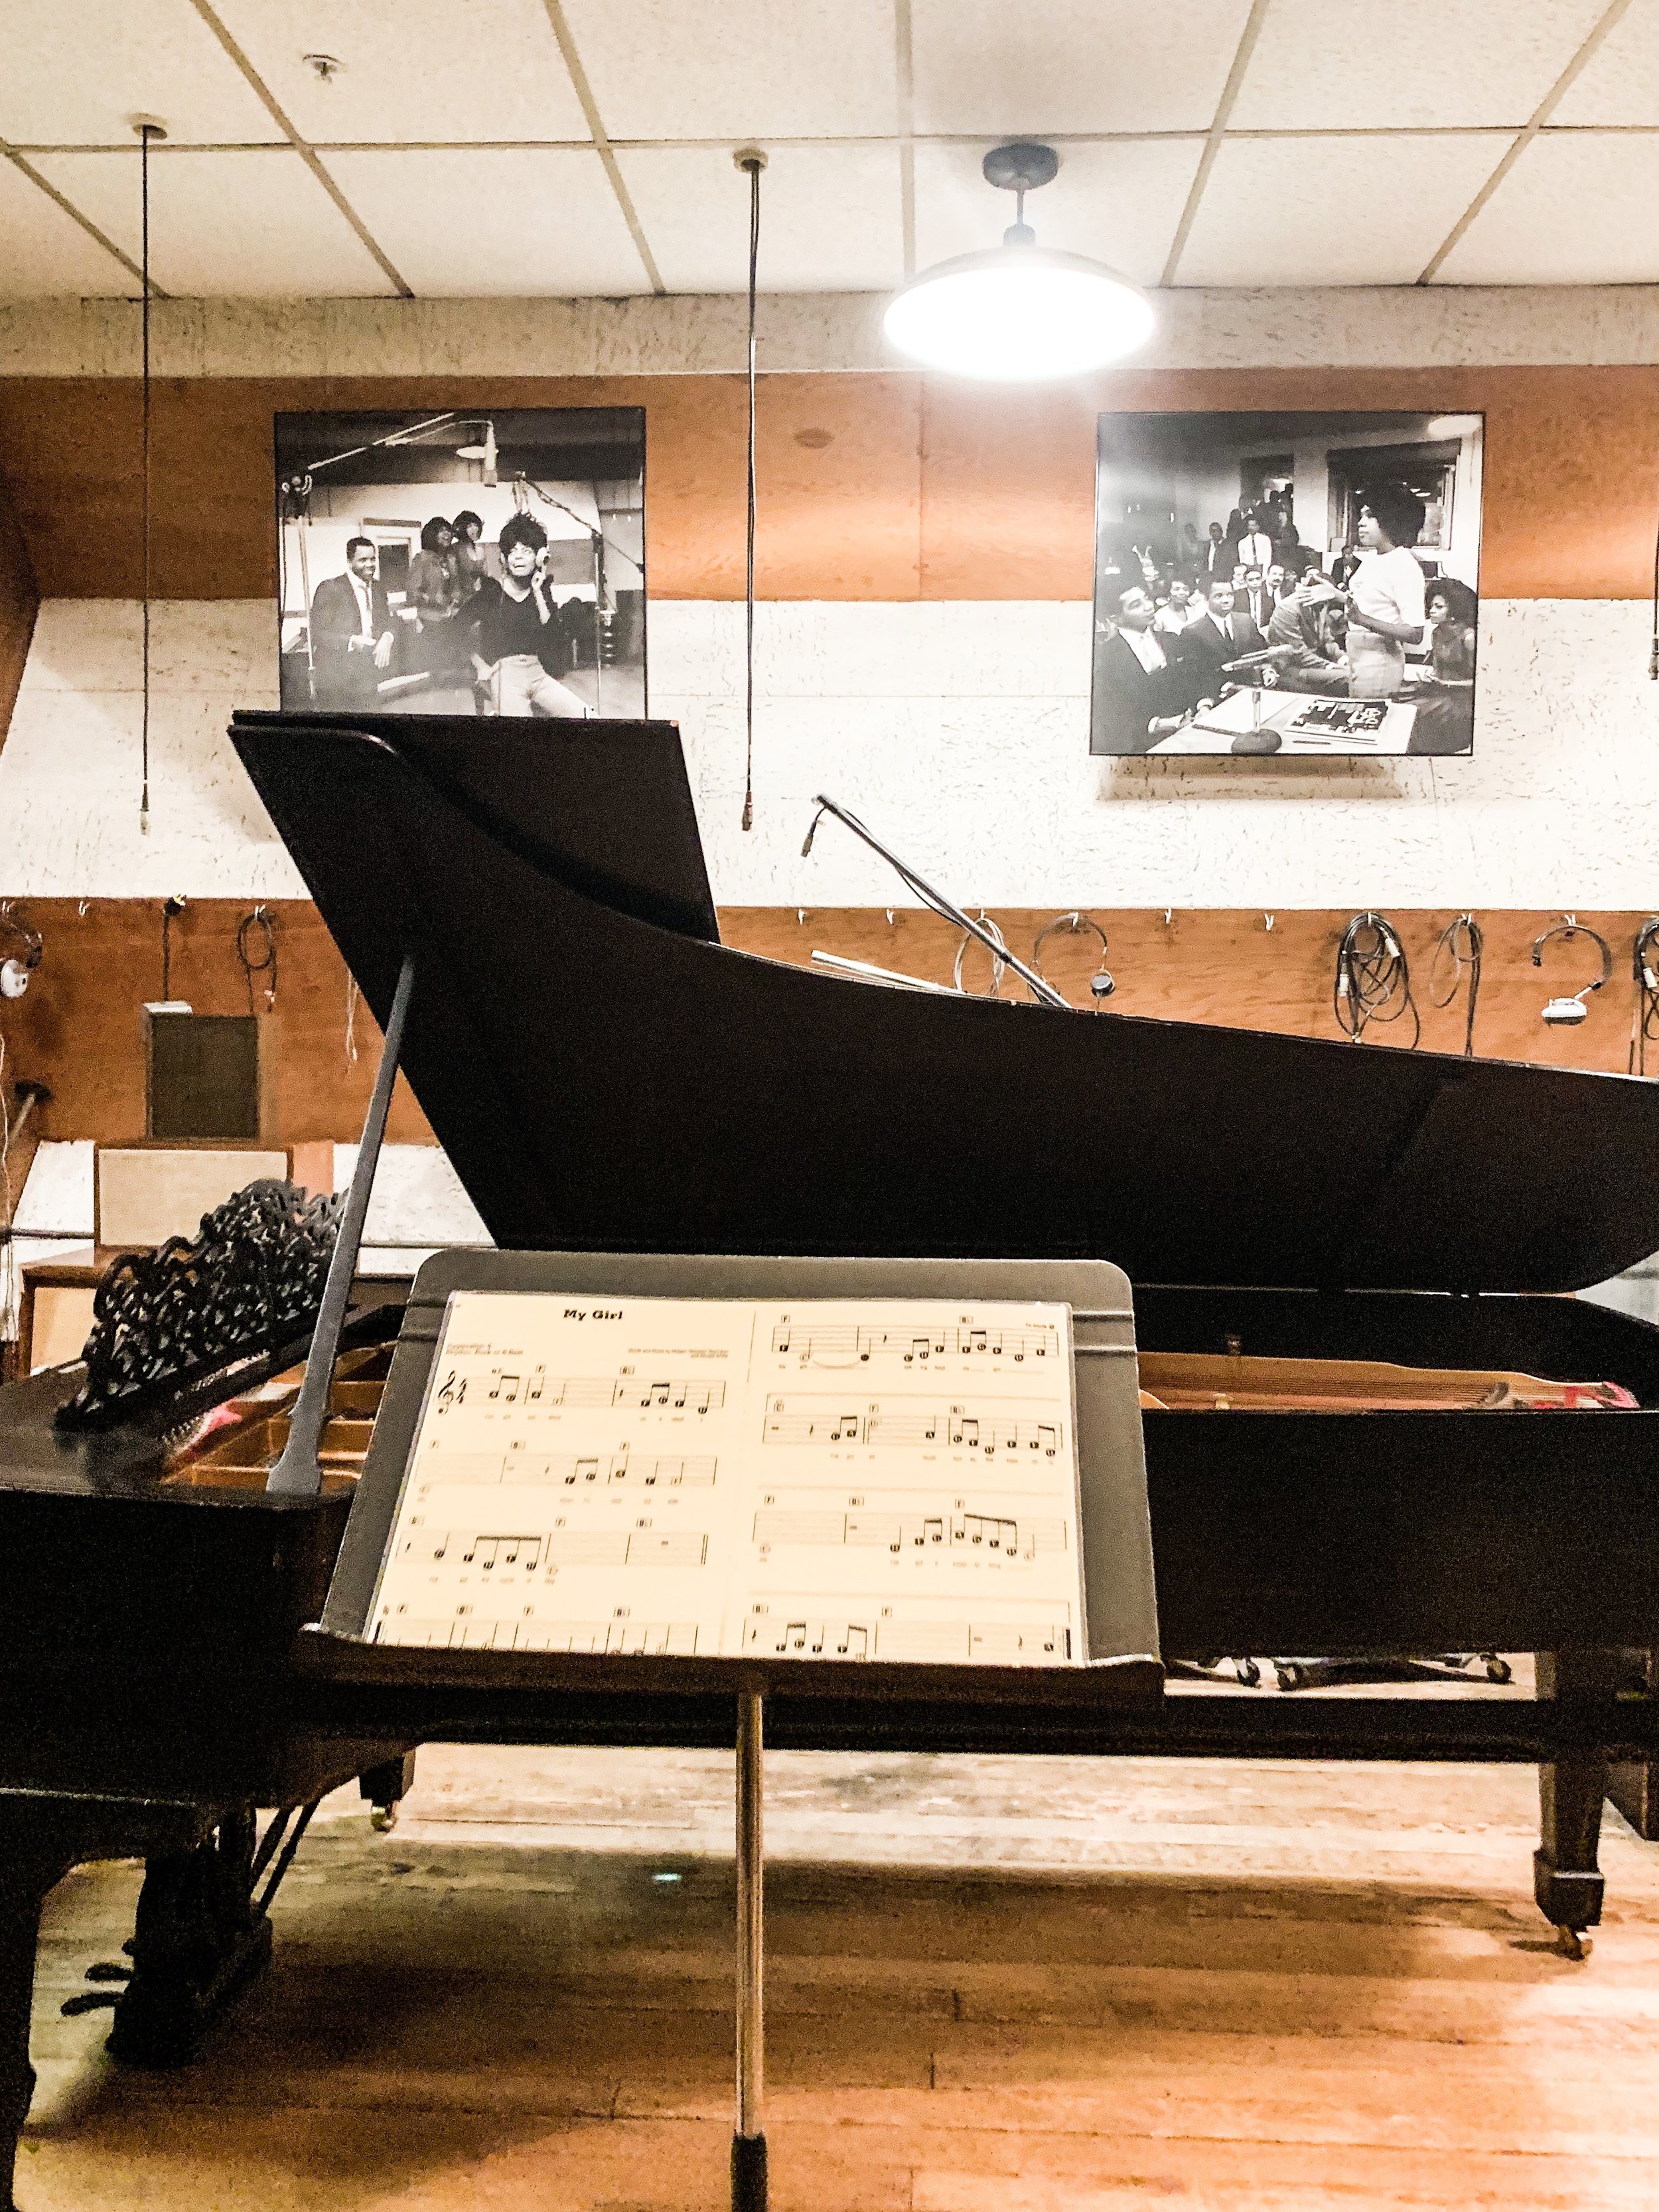 A look inside the original Motown recording studio